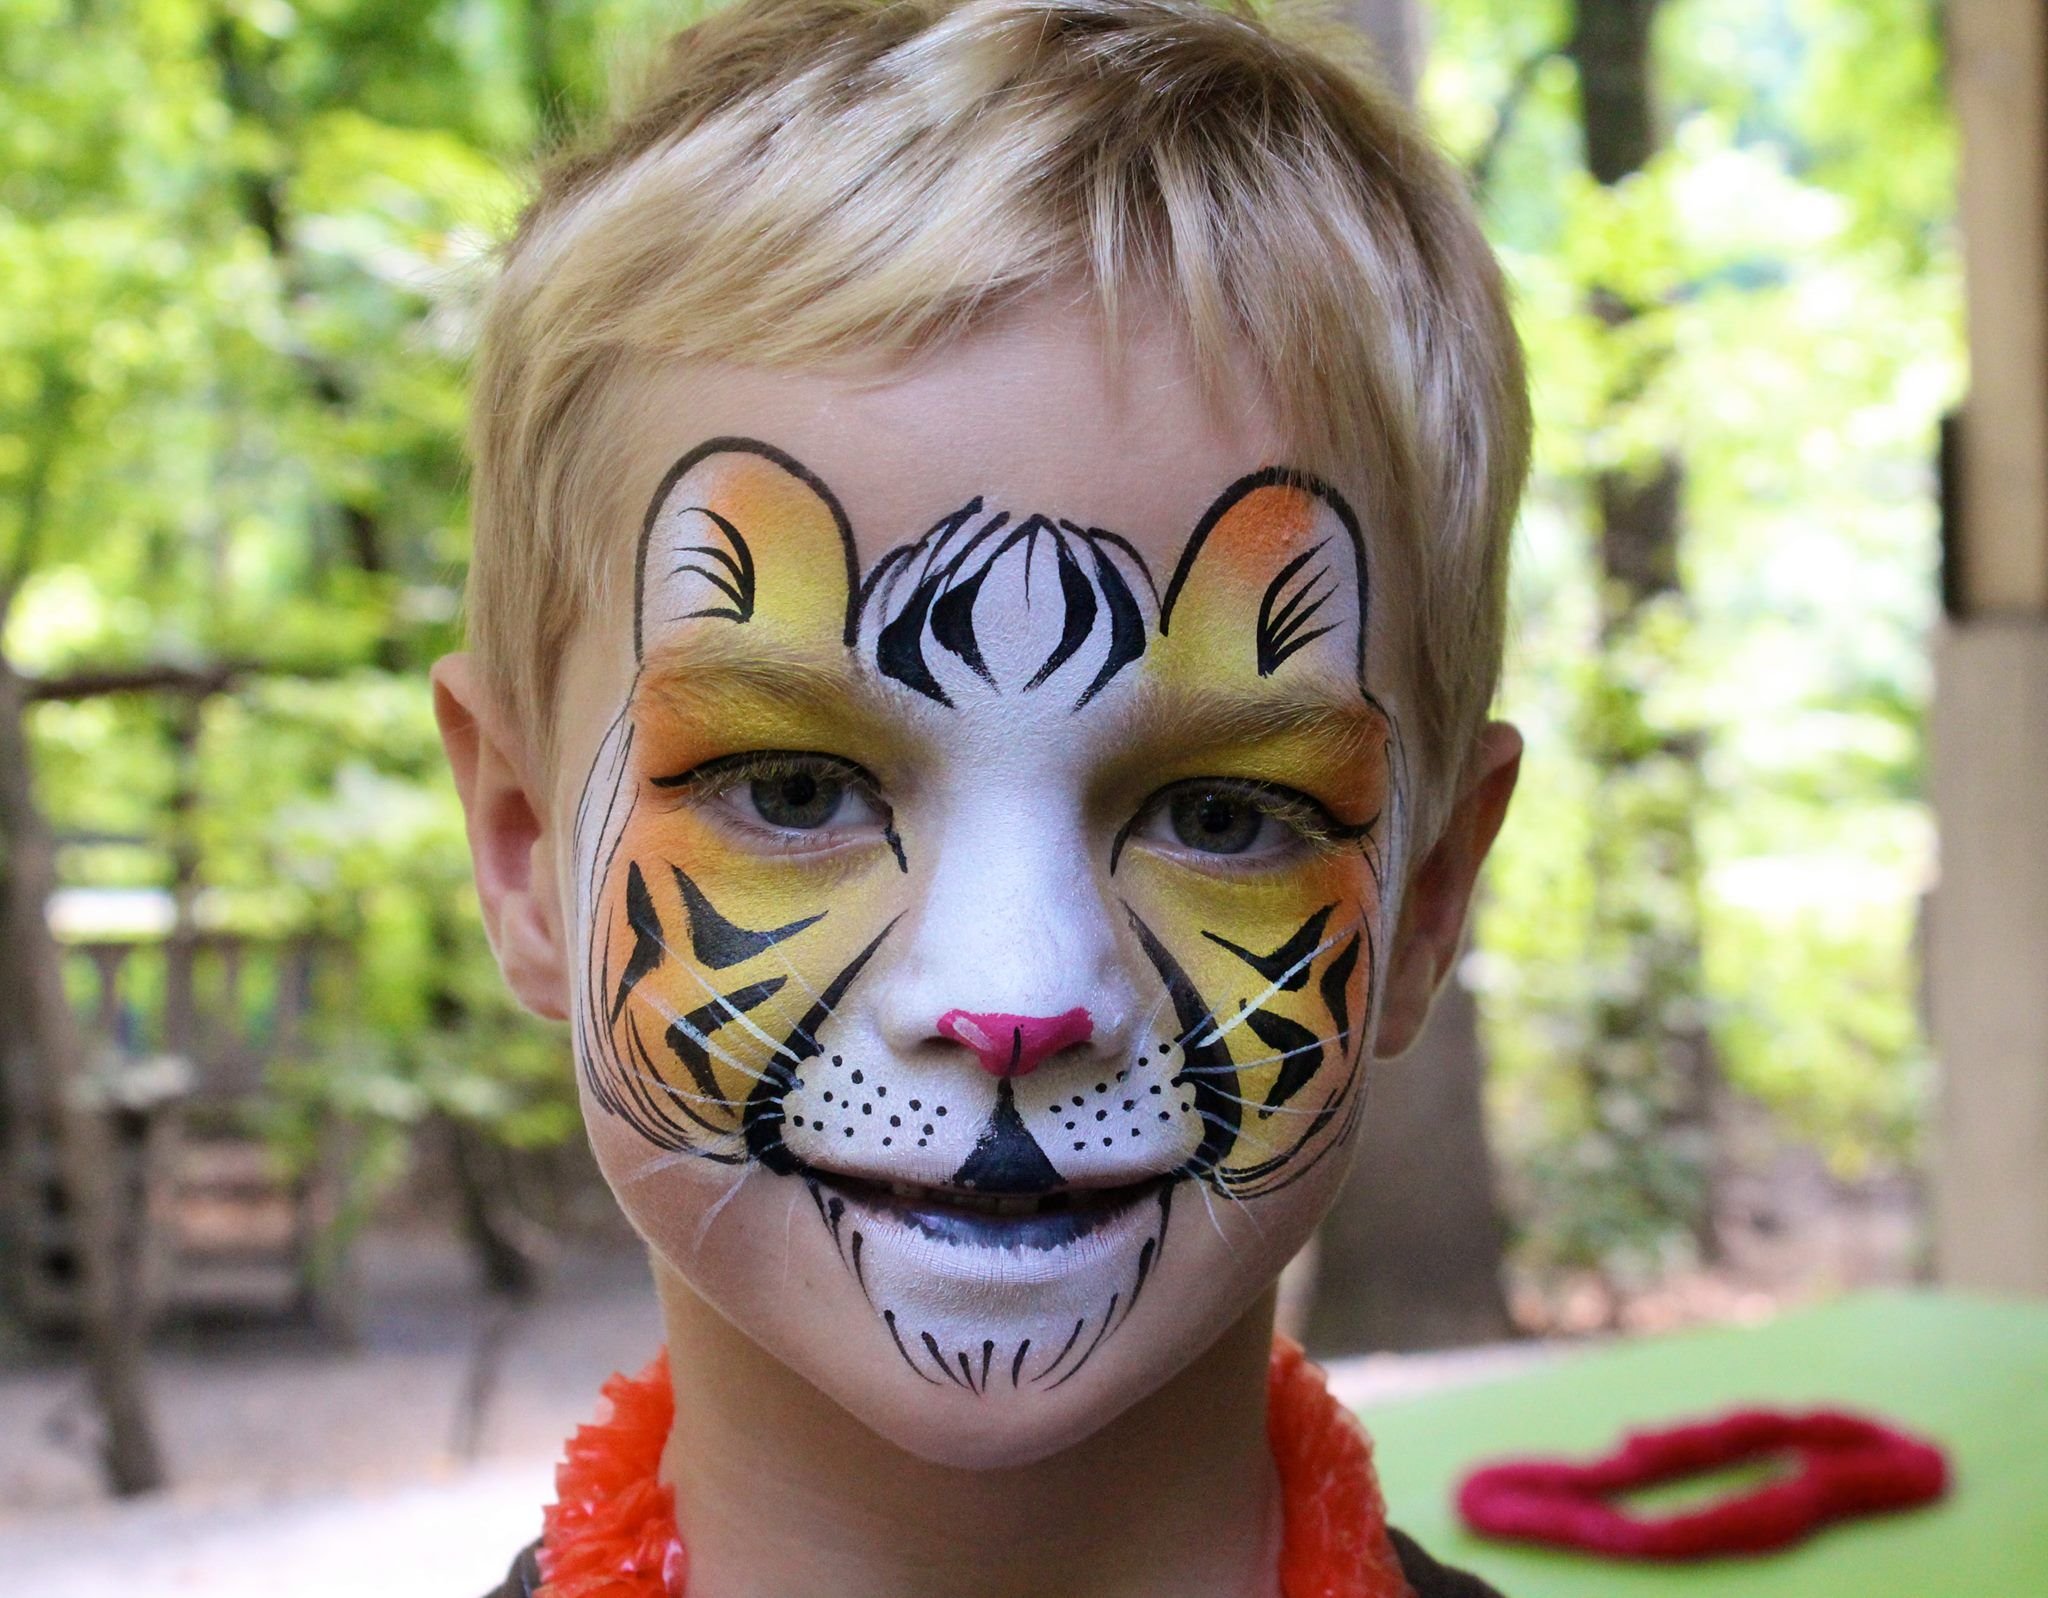 Рисунок тигра на лице ребенка